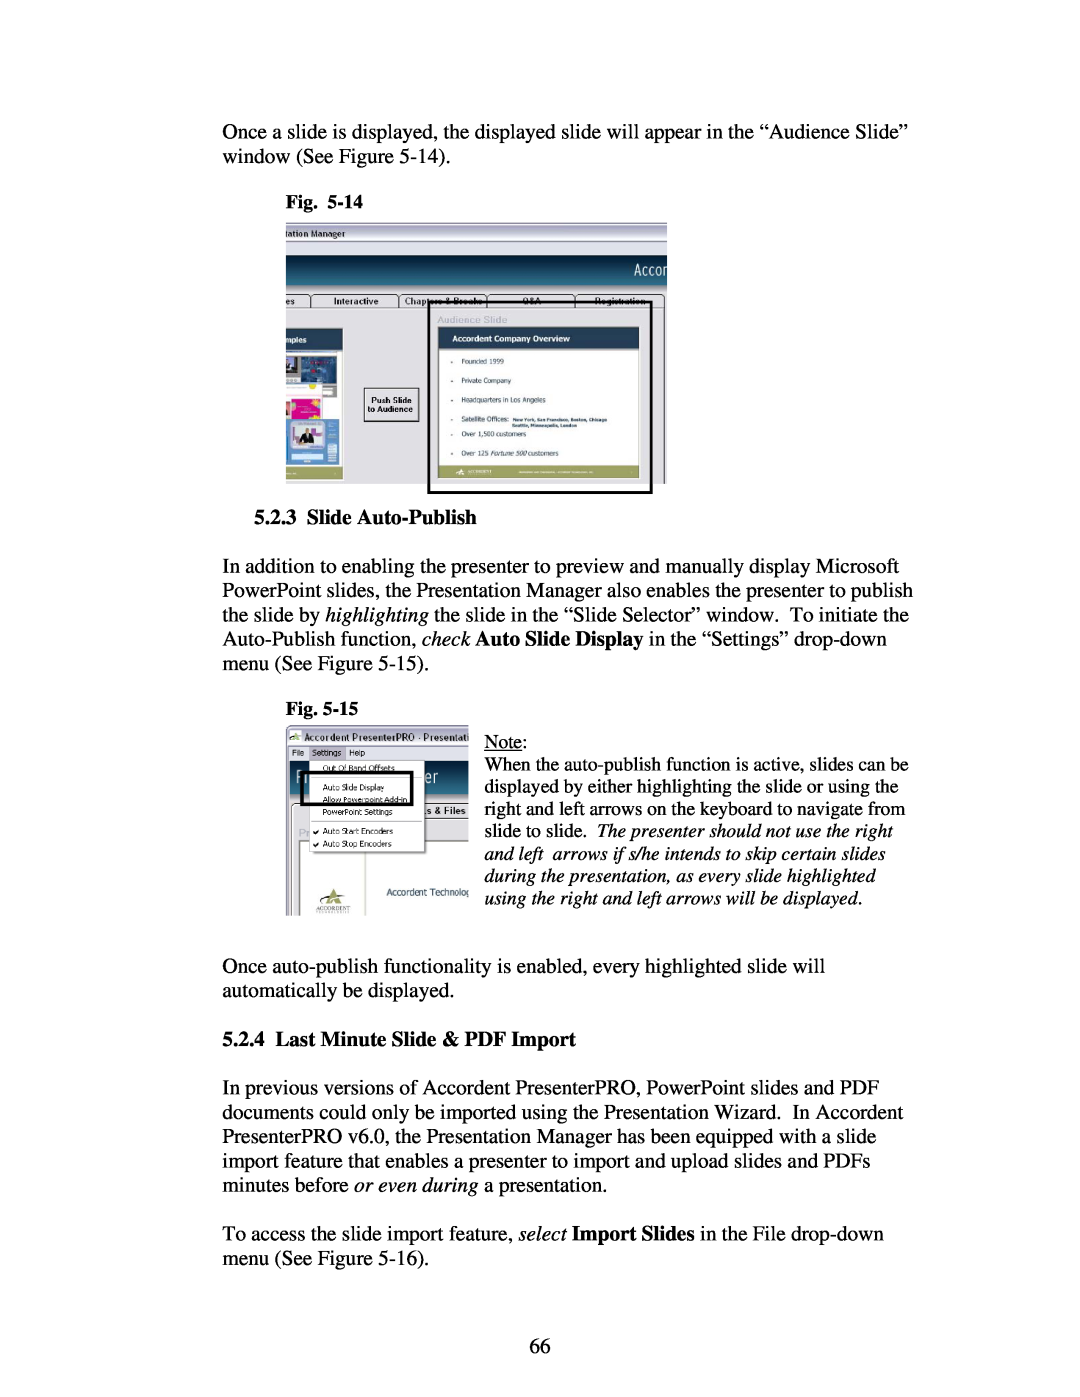 Polycom 6.1 user manual Slide Auto-Publish, Last Minute Slide & PDF Import 